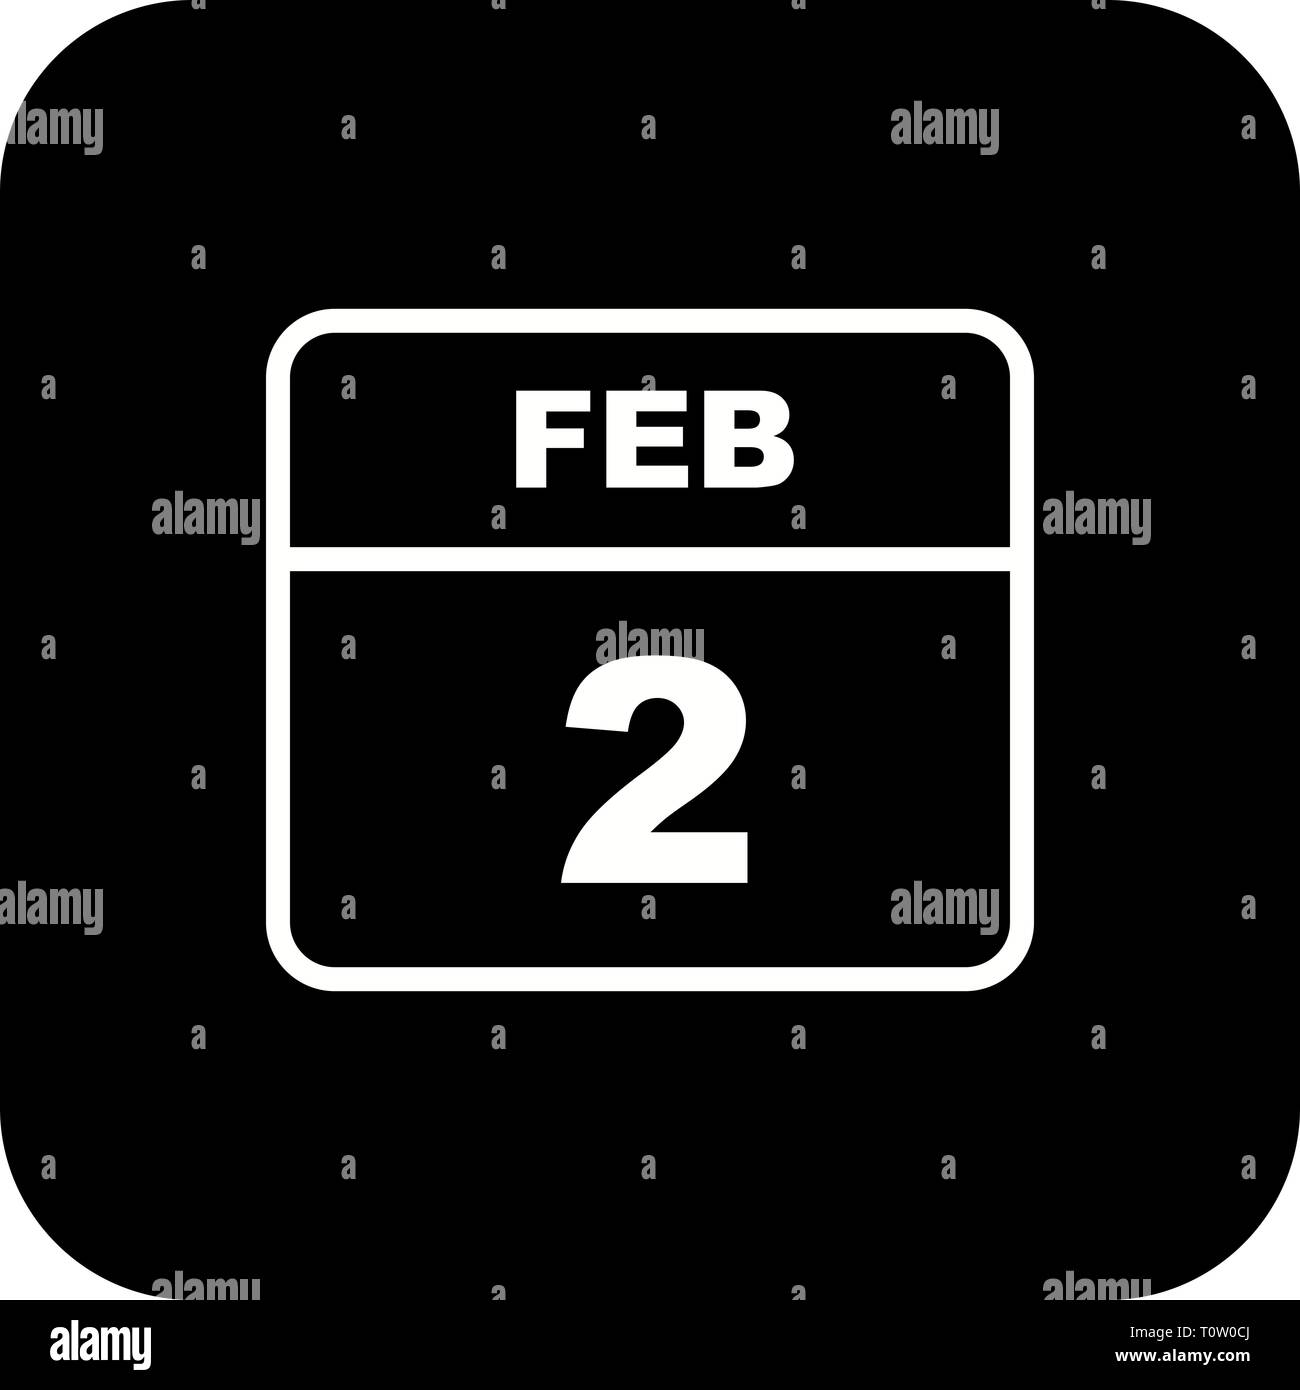 February 2nd Date on a Single Day Calendar Stock Photo Alamy